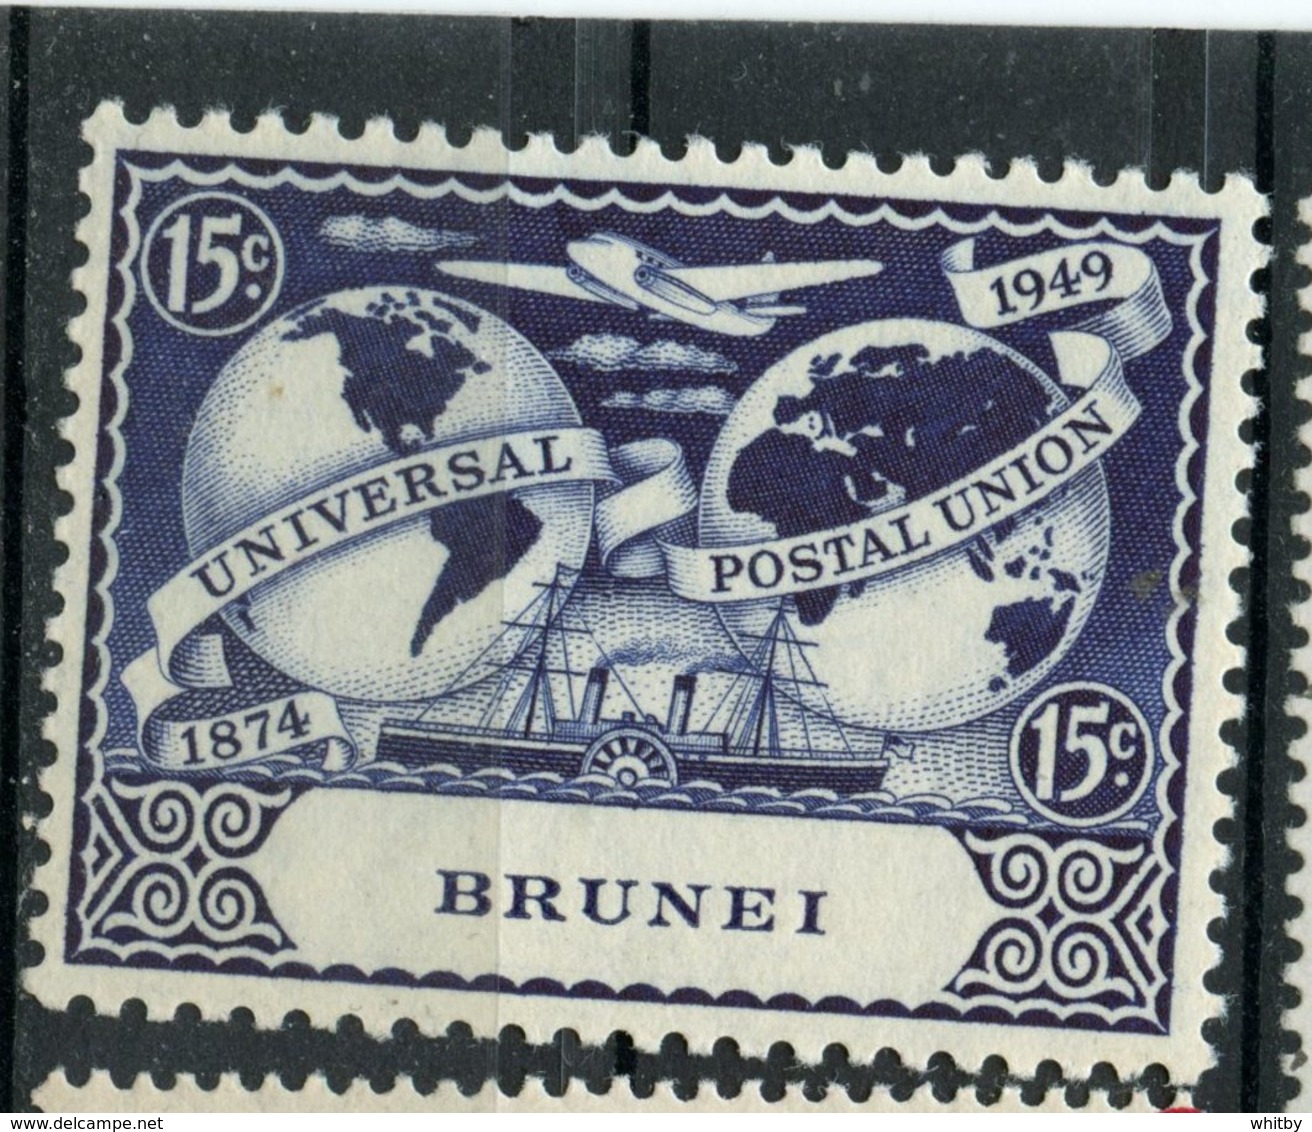 Brunei 1949 15c Universal Postal Union Issue #80  MNH - Brunei (...-1984)